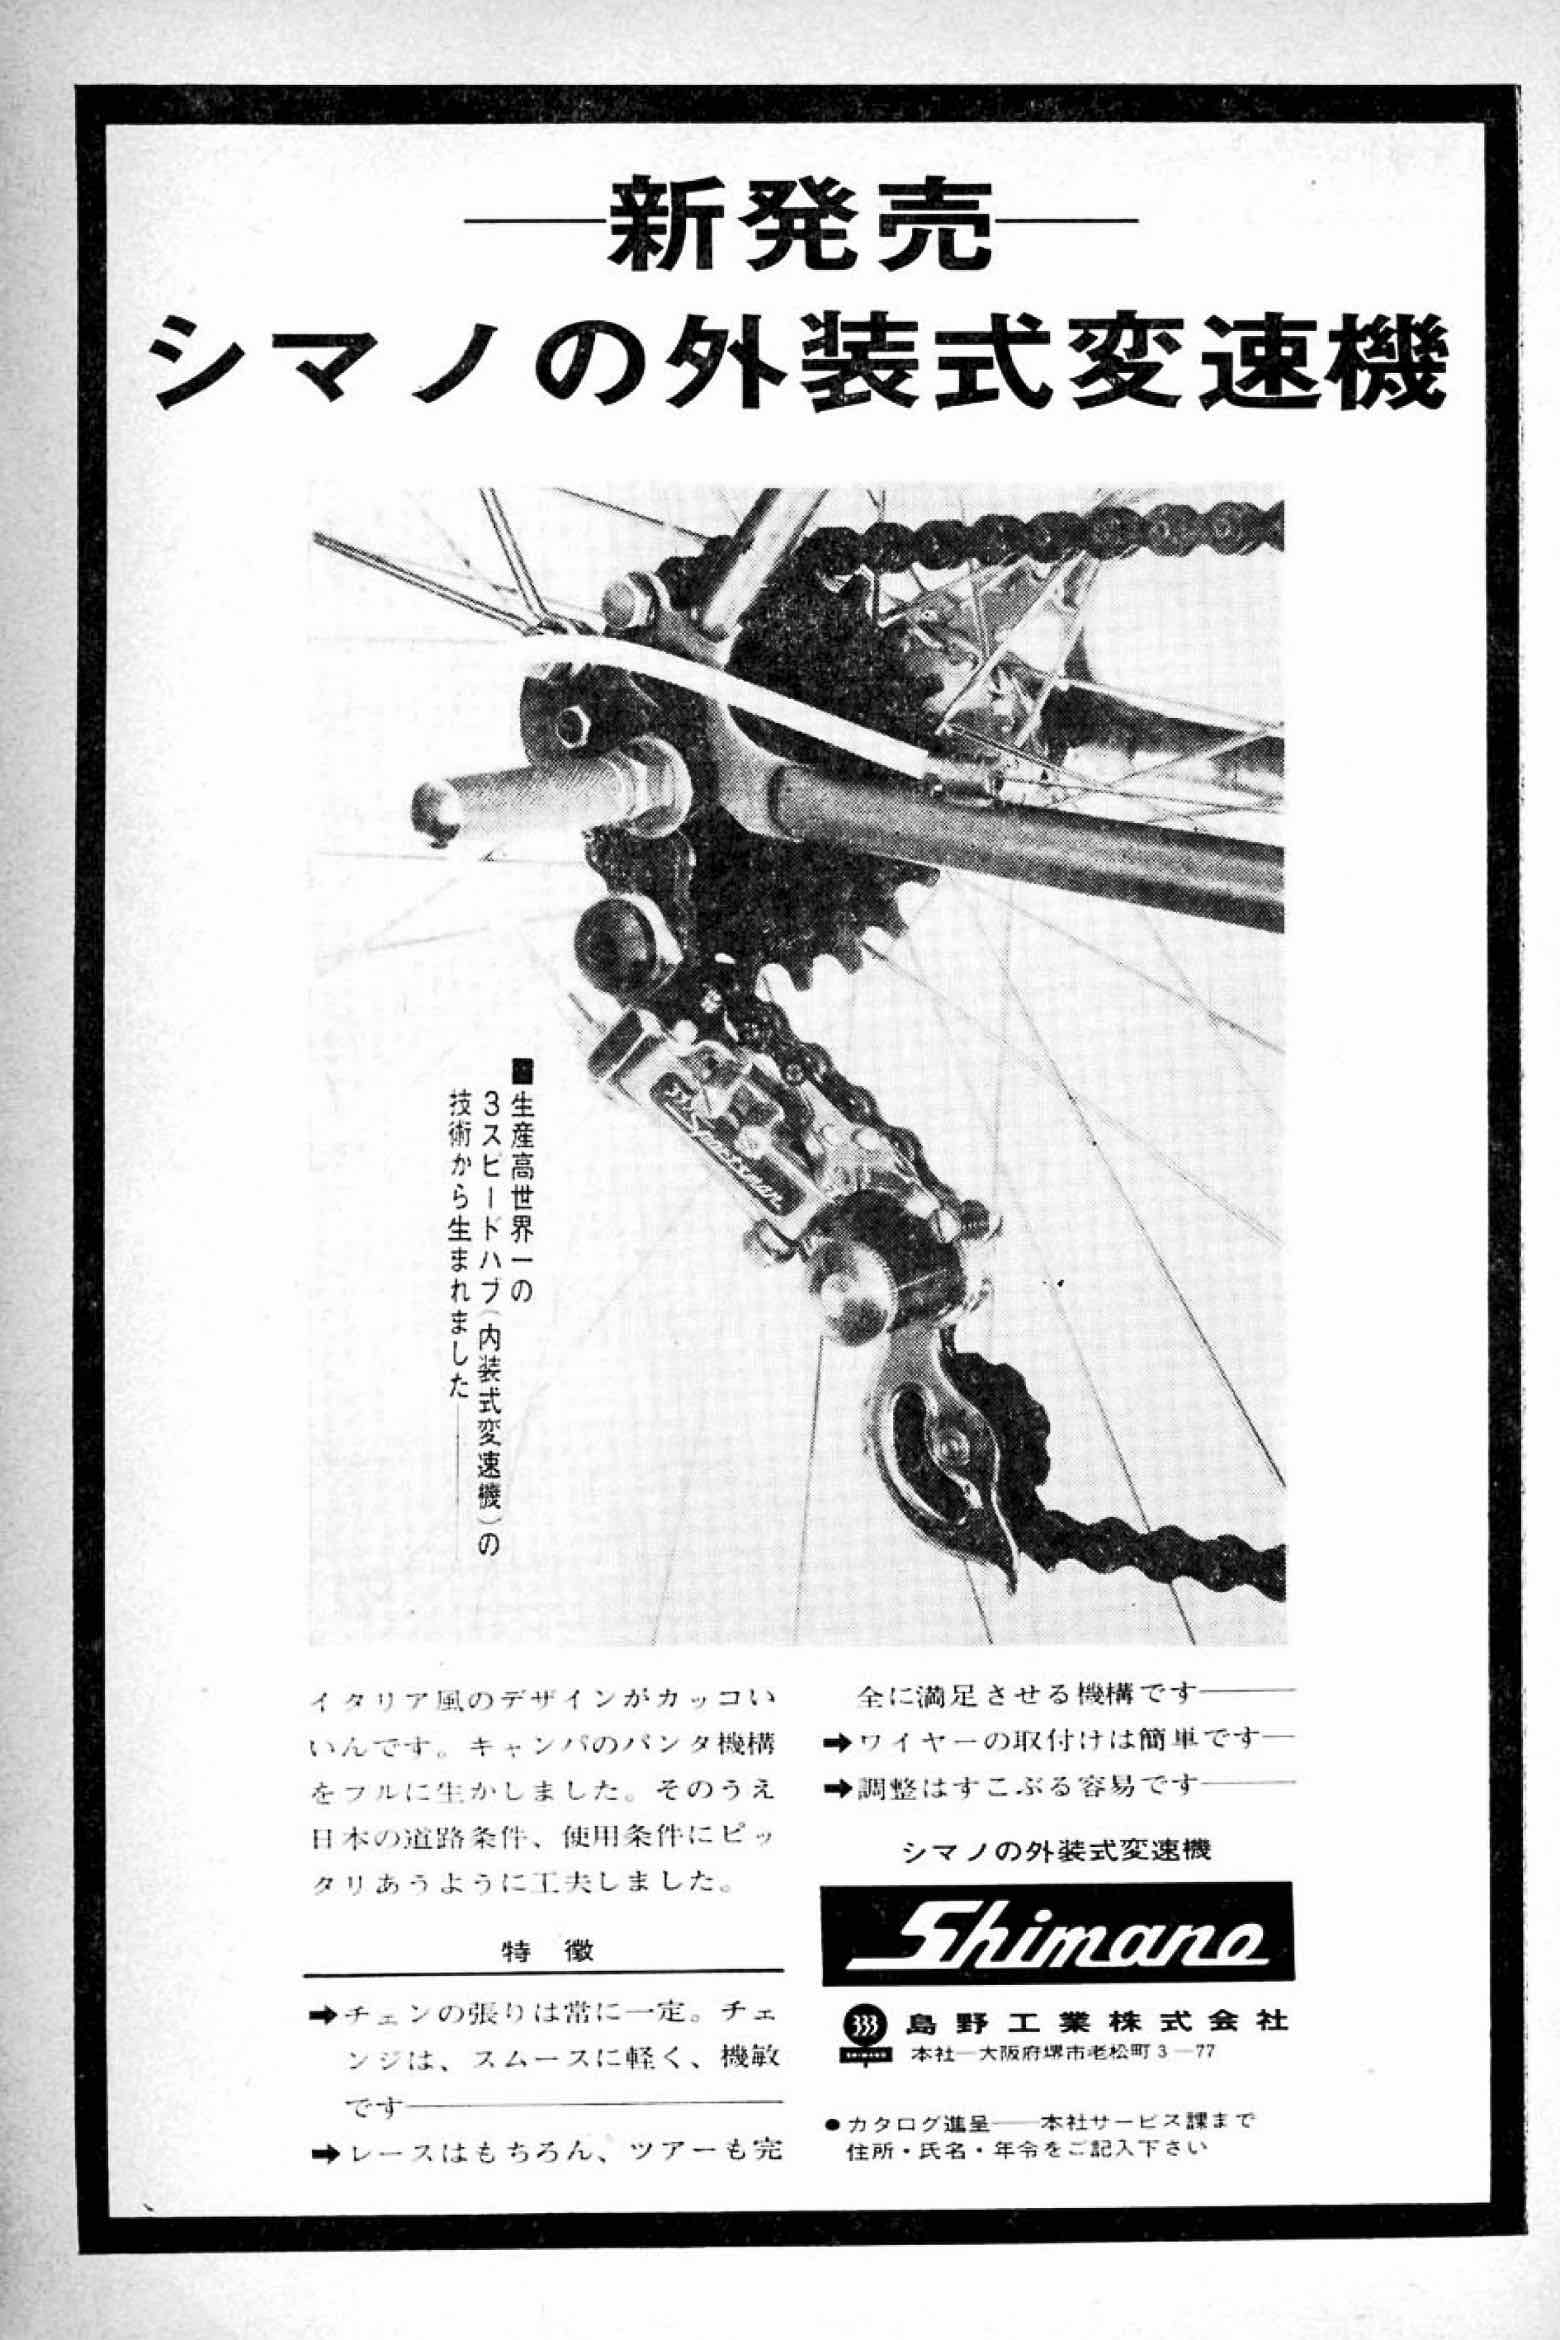 New Cycling April 1965 - Shimano advert (1st style) main image